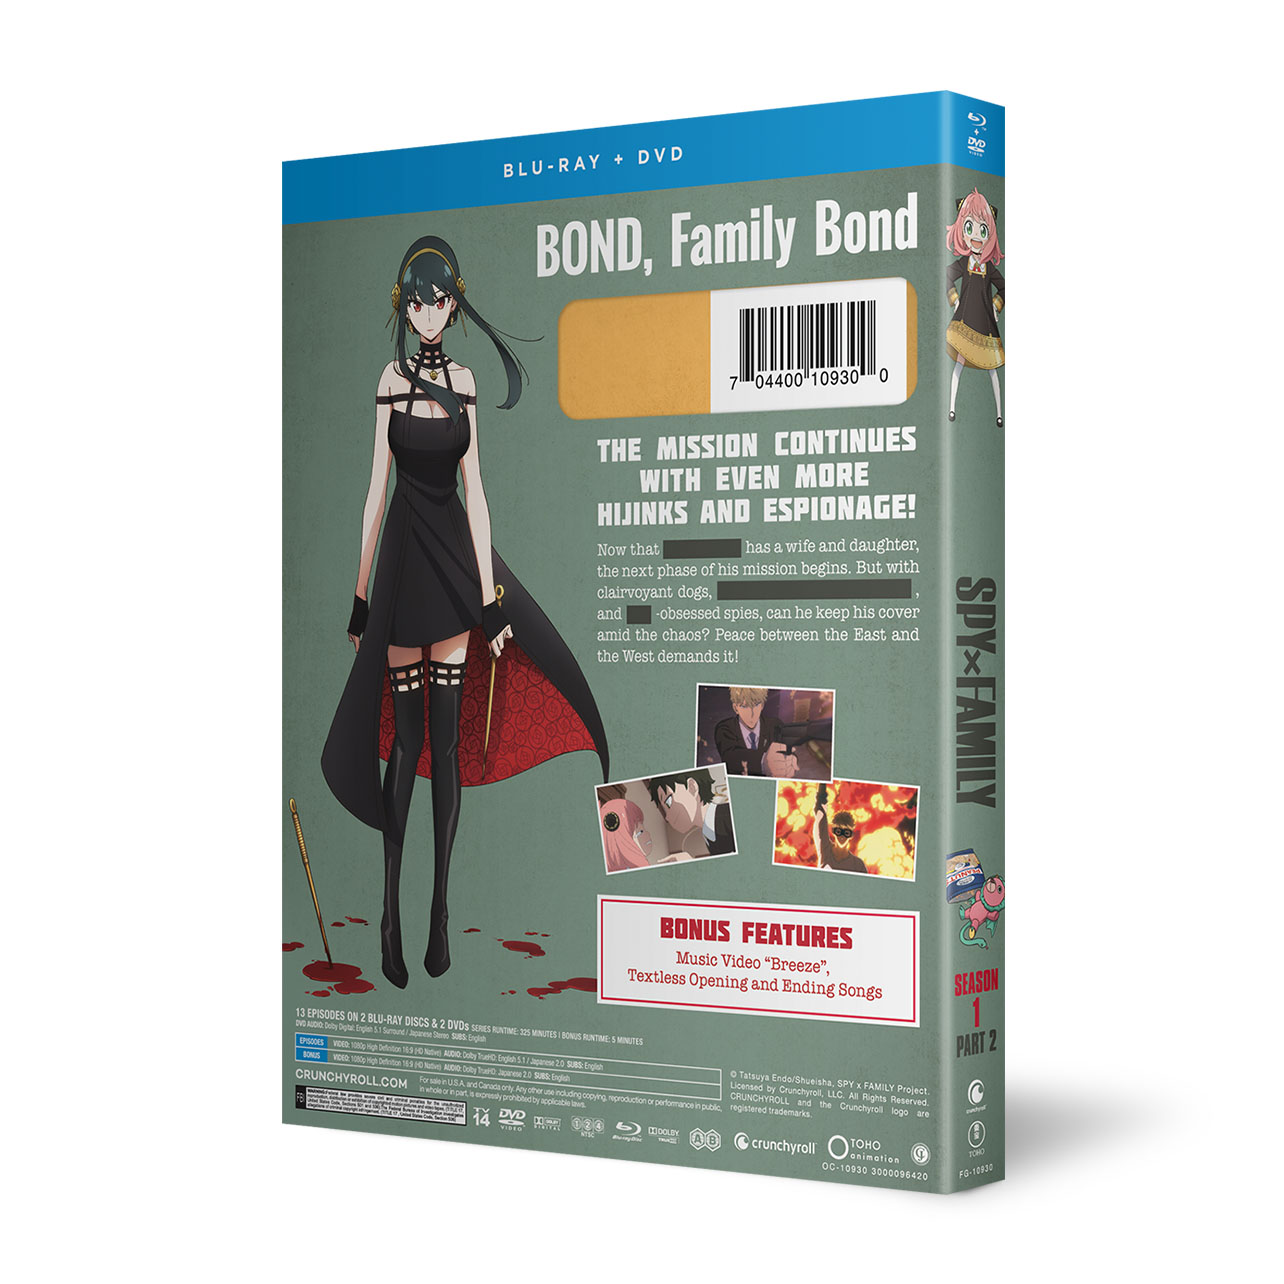 Spy x Family Part 2 (DVD) (2022) Anime